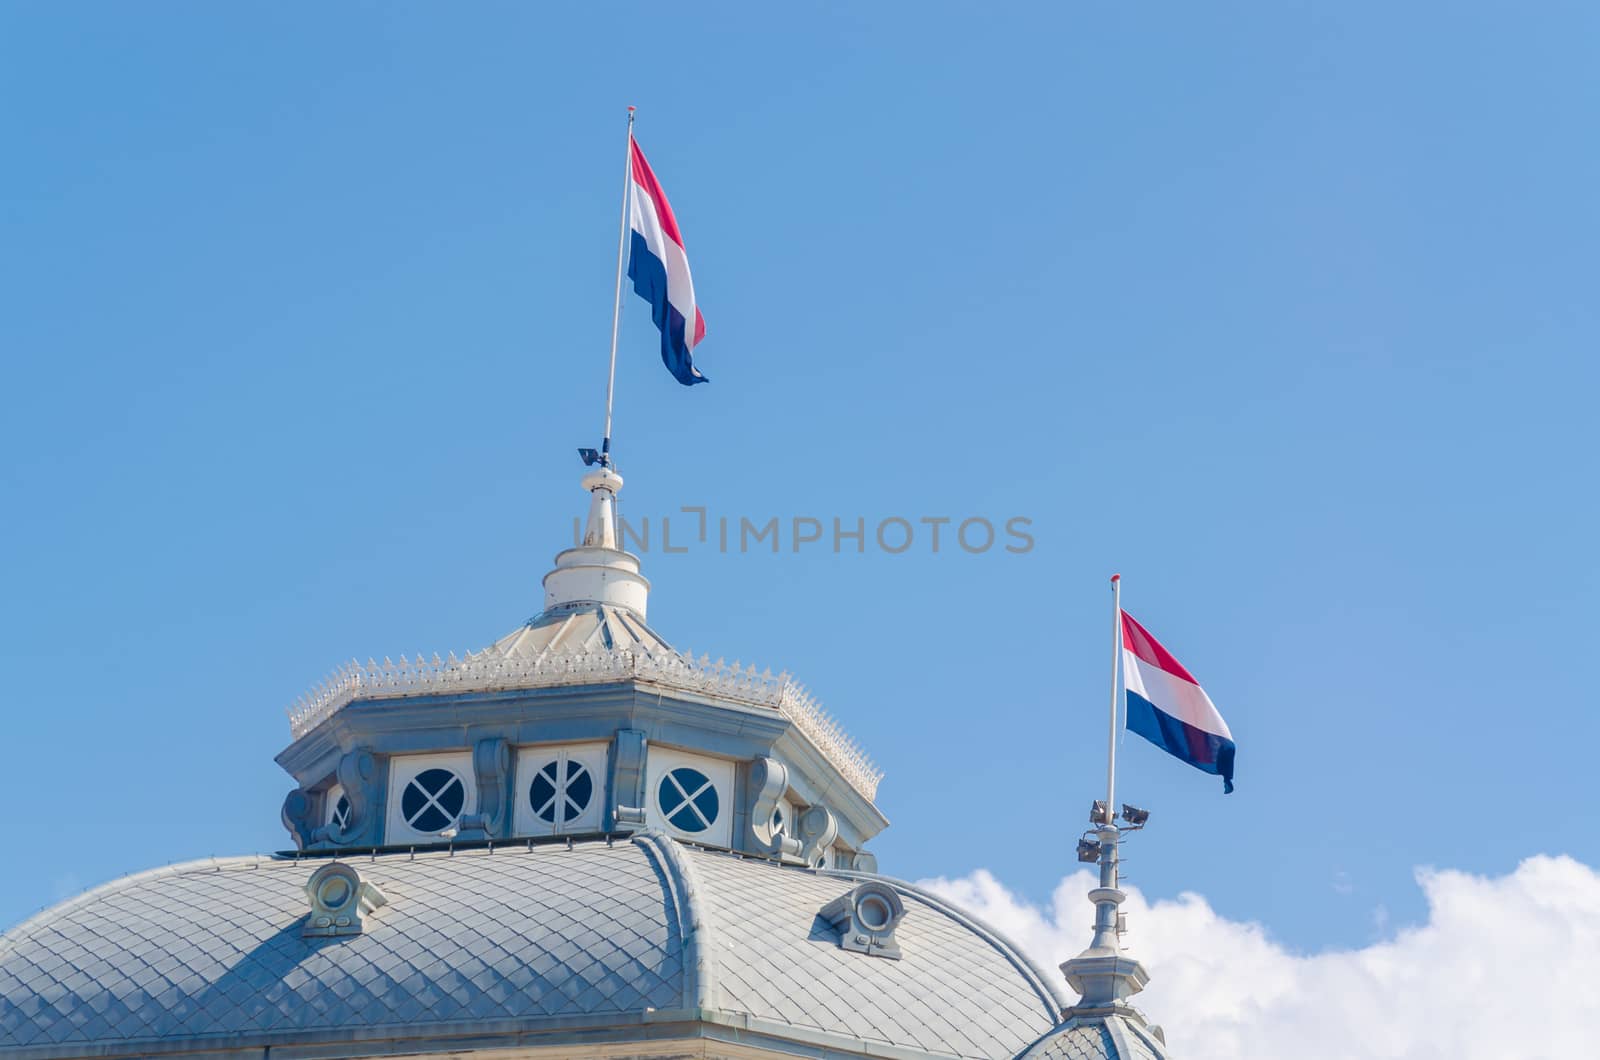 Gable view with flags of the Kurhaus in Scheveningen Netherlands, Holland against a blue sky.